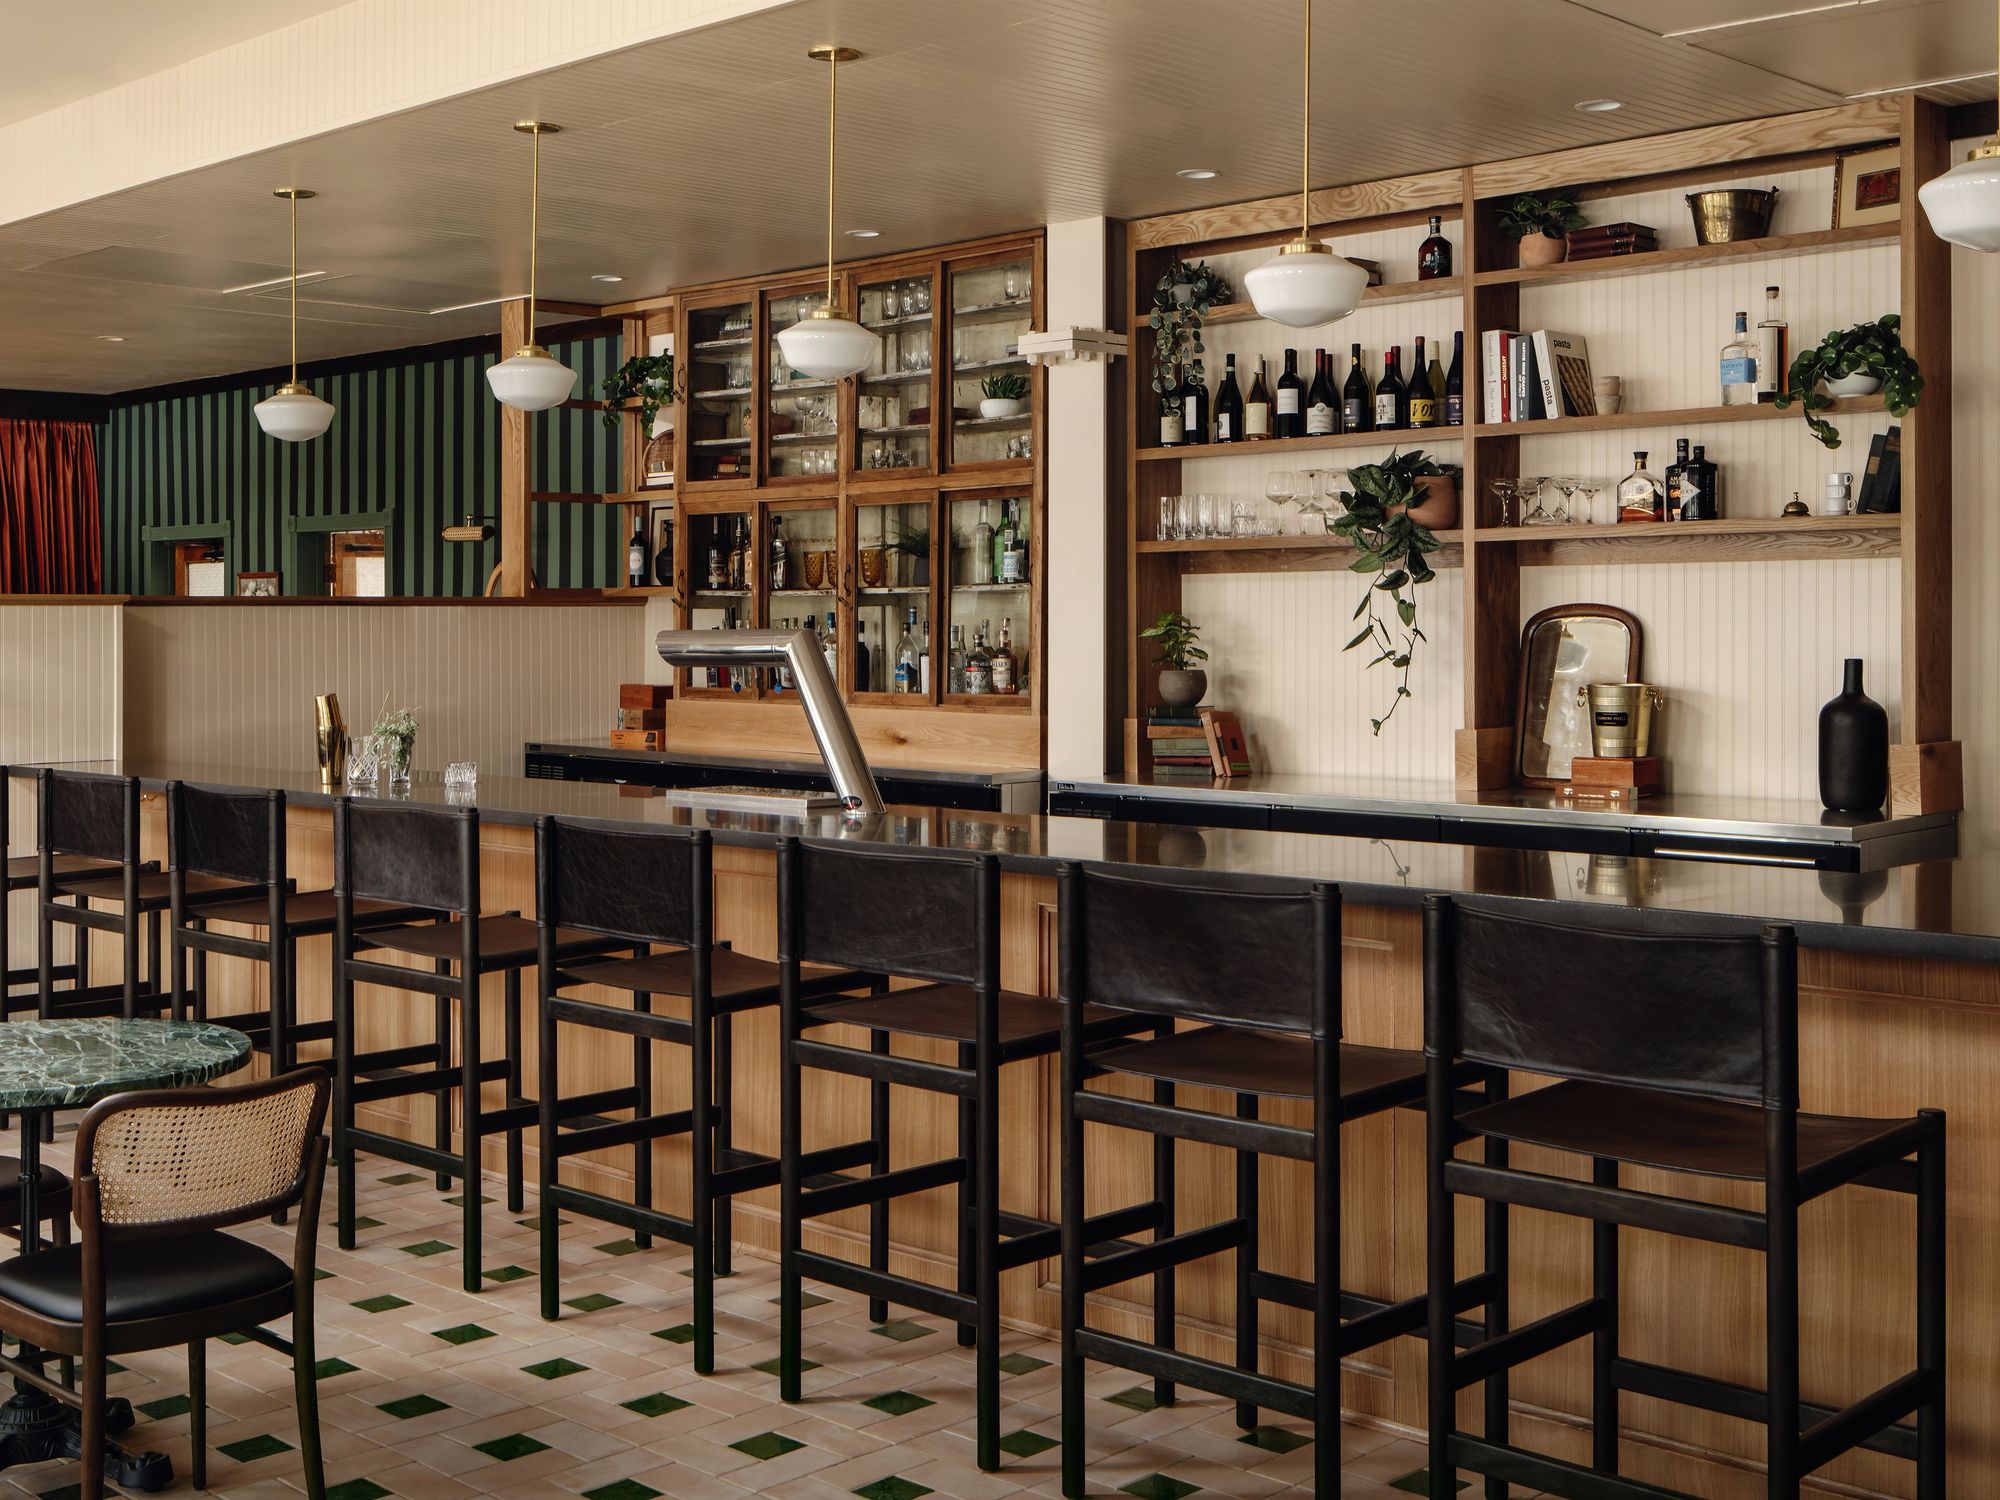 New Austin café by Intero duo bakes Italian hospitality into its all-day menu